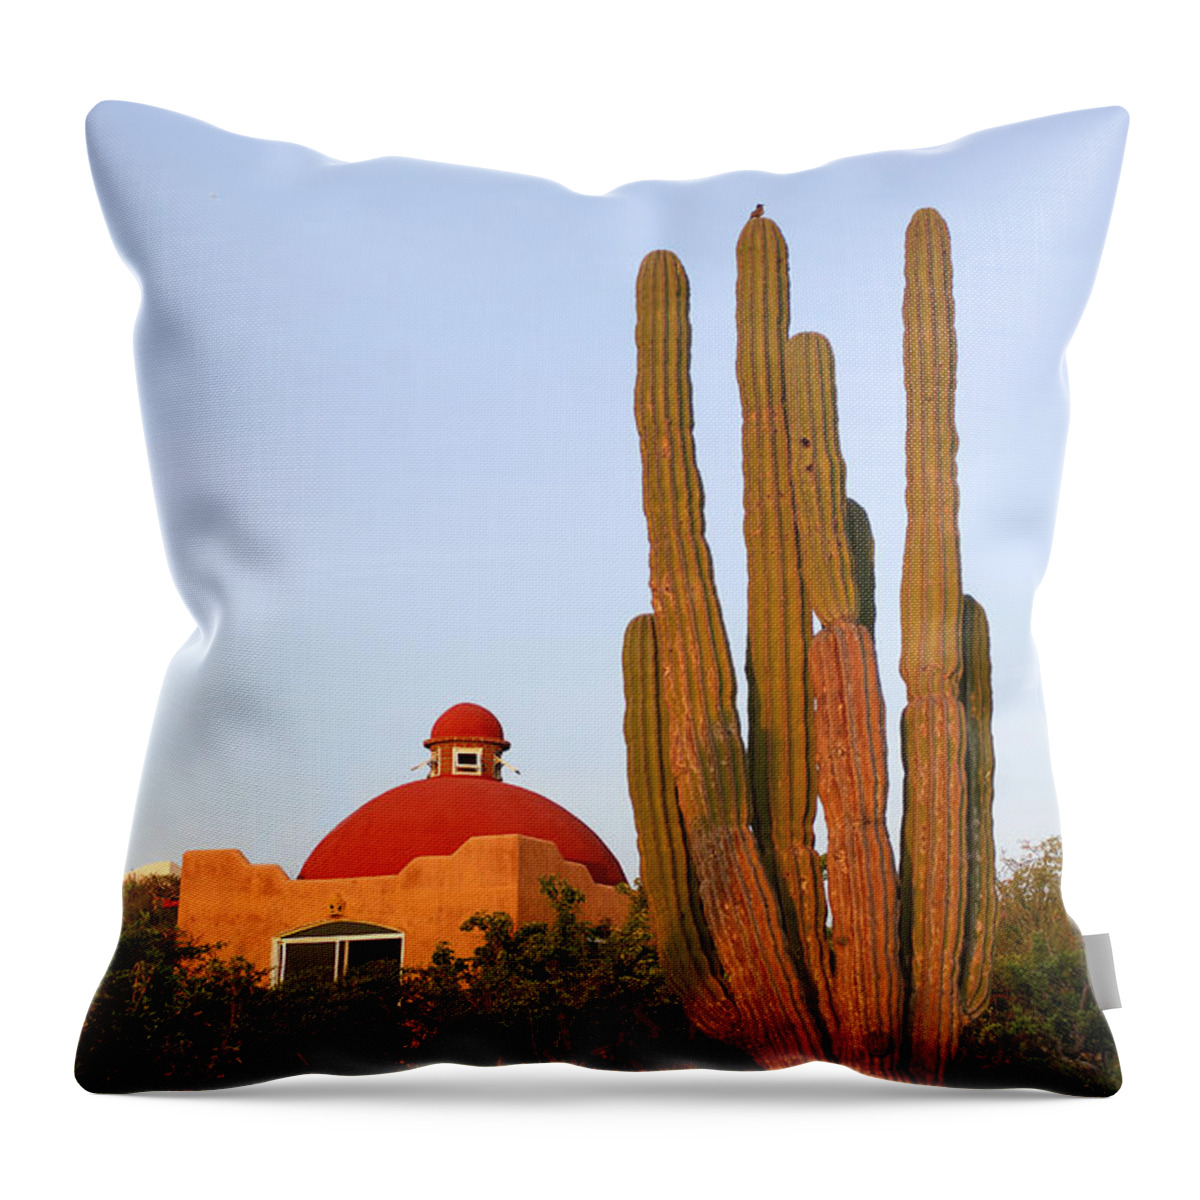 Estock Throw Pillow featuring the digital art Bay Resort, La Ventana, Mexico by Heeb Photos